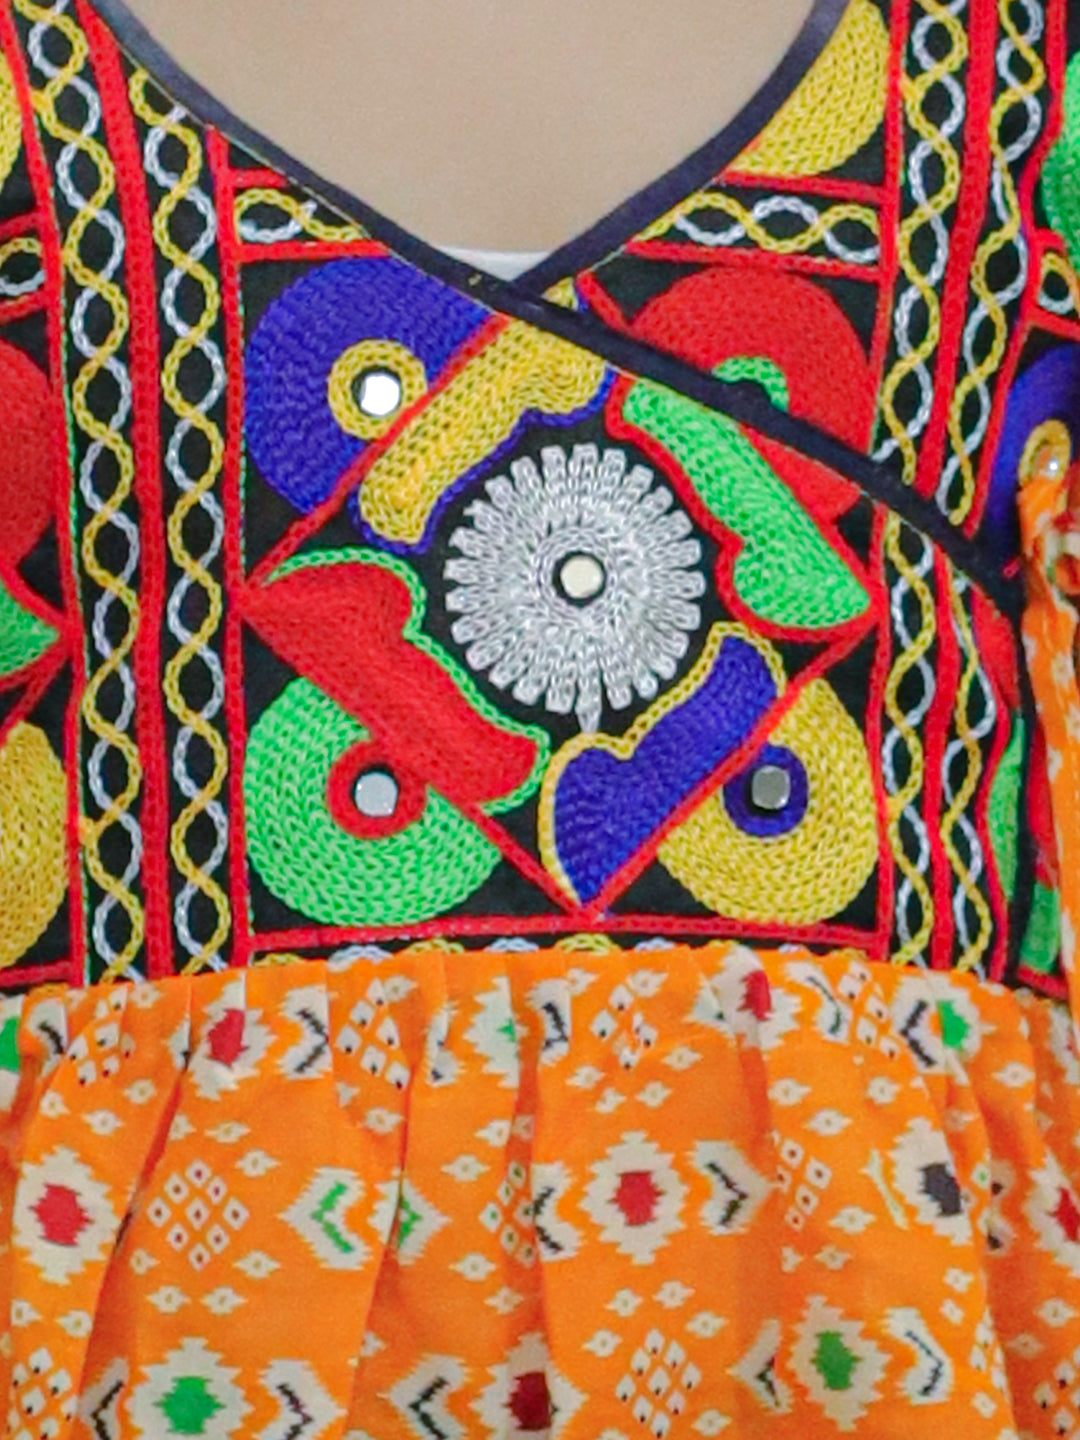 BownBee Kids Girls Navratri Dandiya  Garba  Embroidered Printed Cotton Top with Cotton Dhoti- Yellow